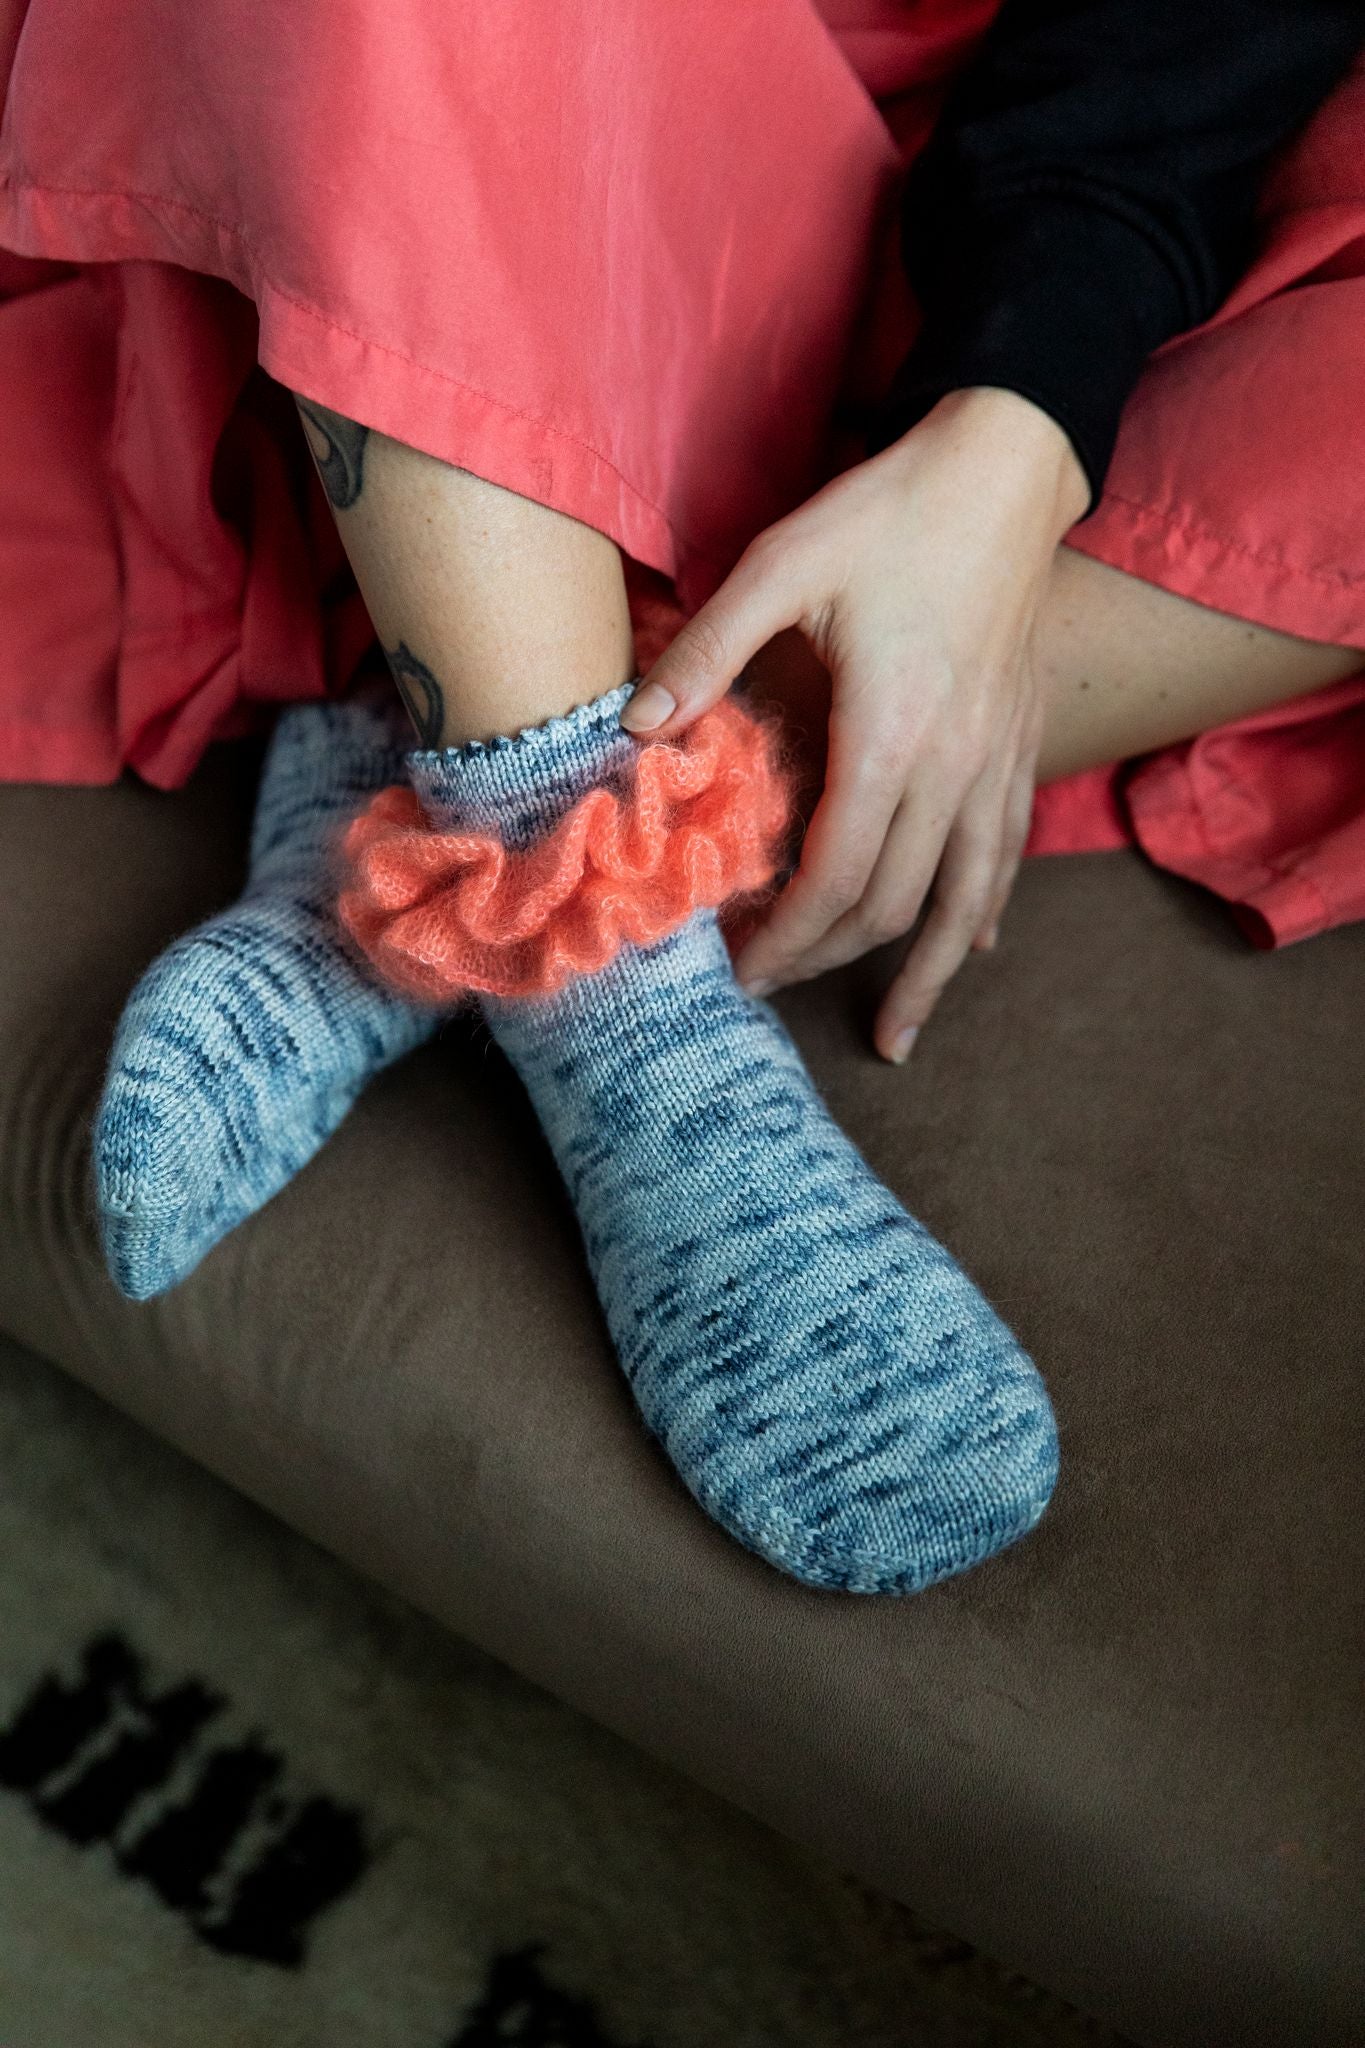 52 Weeks of Socks Volume 2 – Maker+Stitch